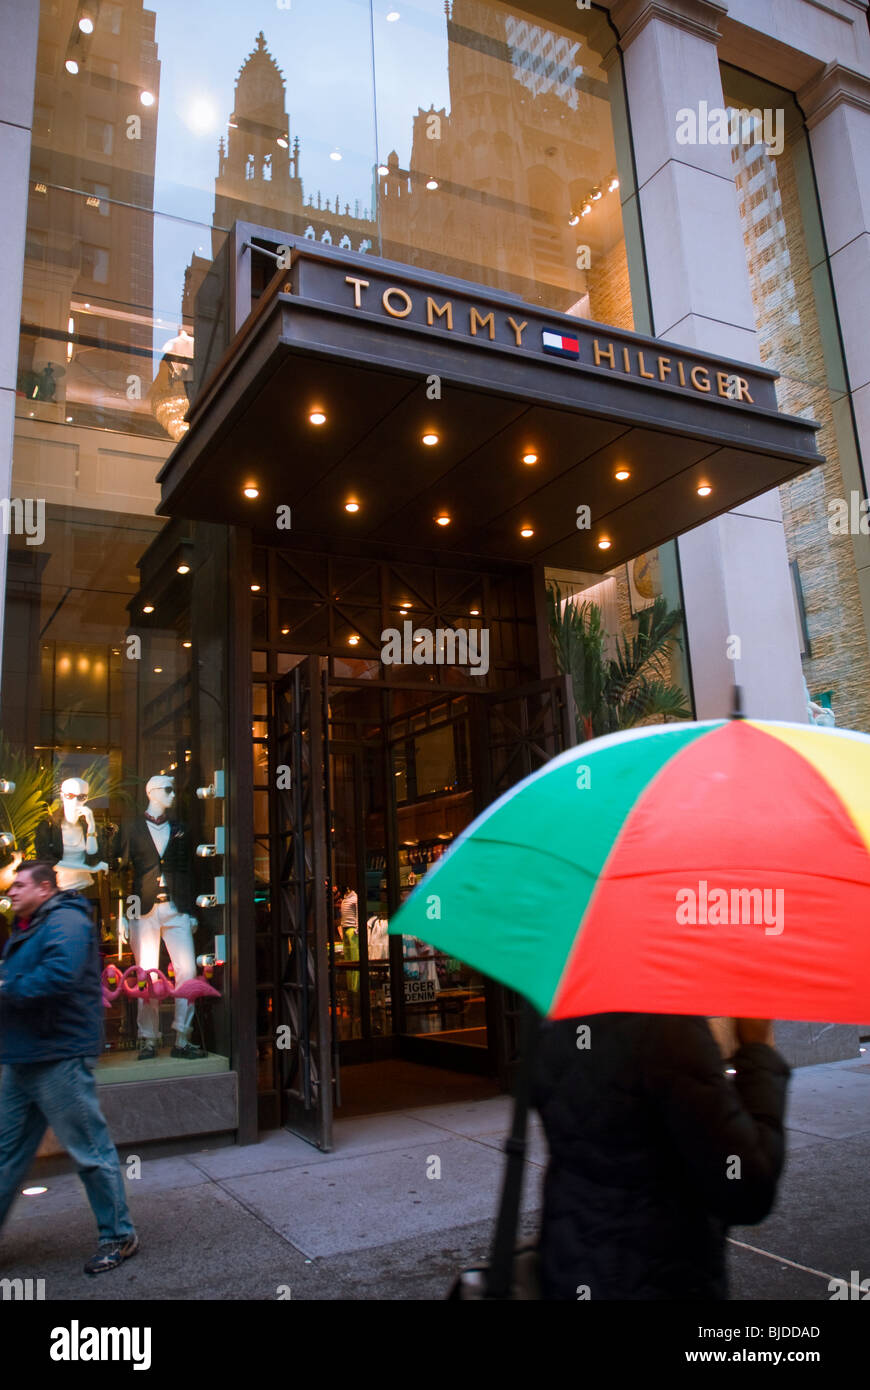 Tommy Hilfiger Store Display Fotos e Imágenes de stock - Alamy